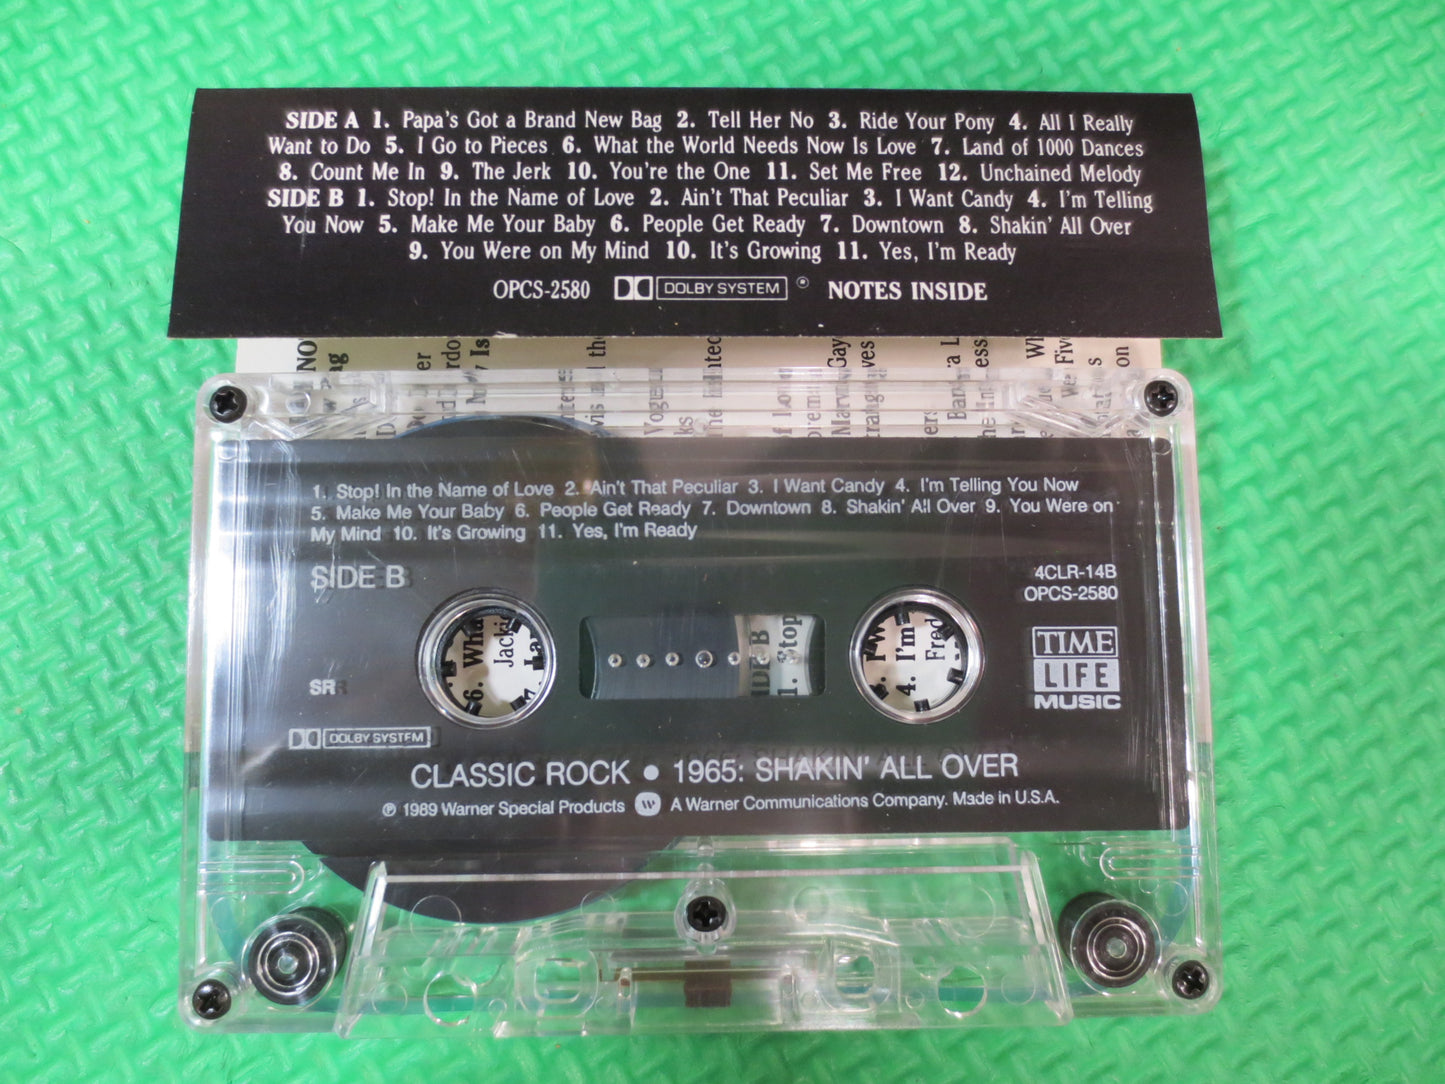 CLASSIC ROCK Tape, SHAKIN' All Over, Time Life Tape, 1965 Album, 1965 Music, Cassette, Classic Rock, Rock Lp, 1989 Cassette